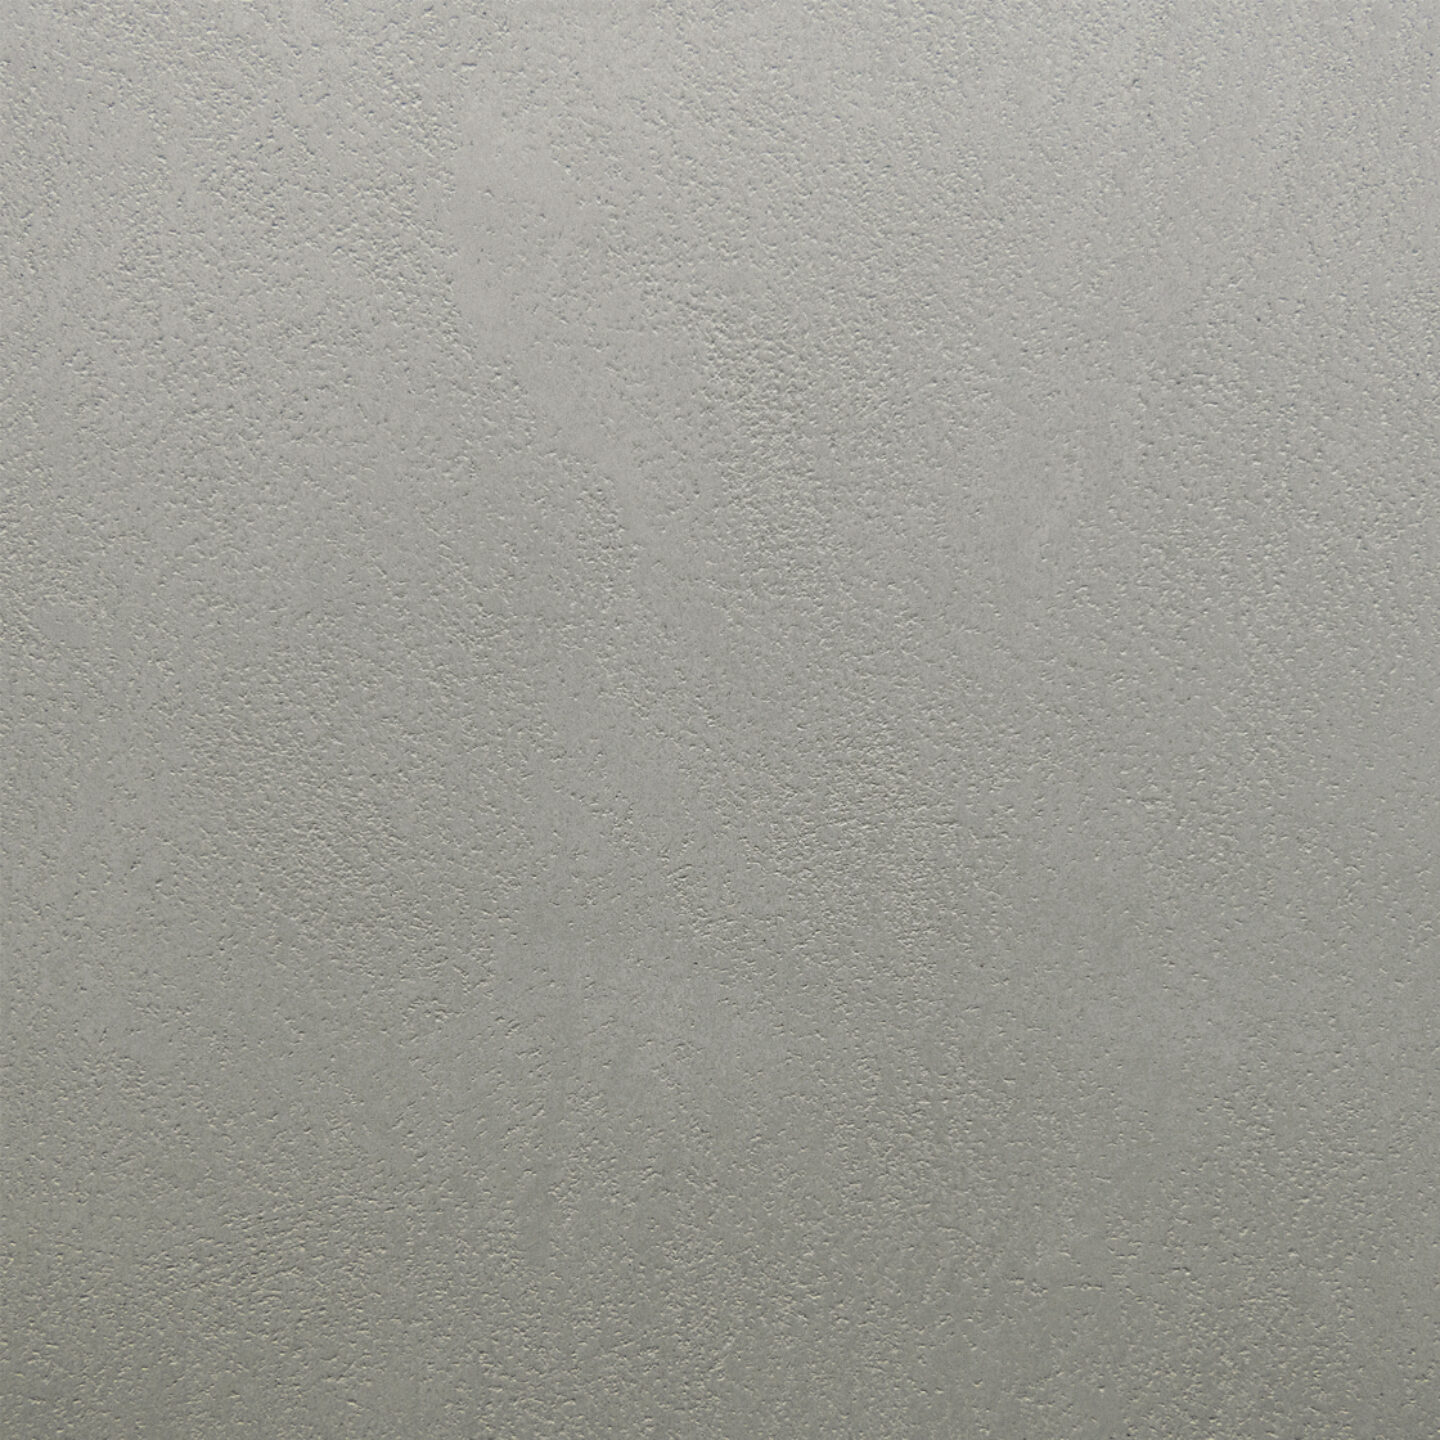 Close up of Armourcoat leatherstone exterior polished plaster finish - 21